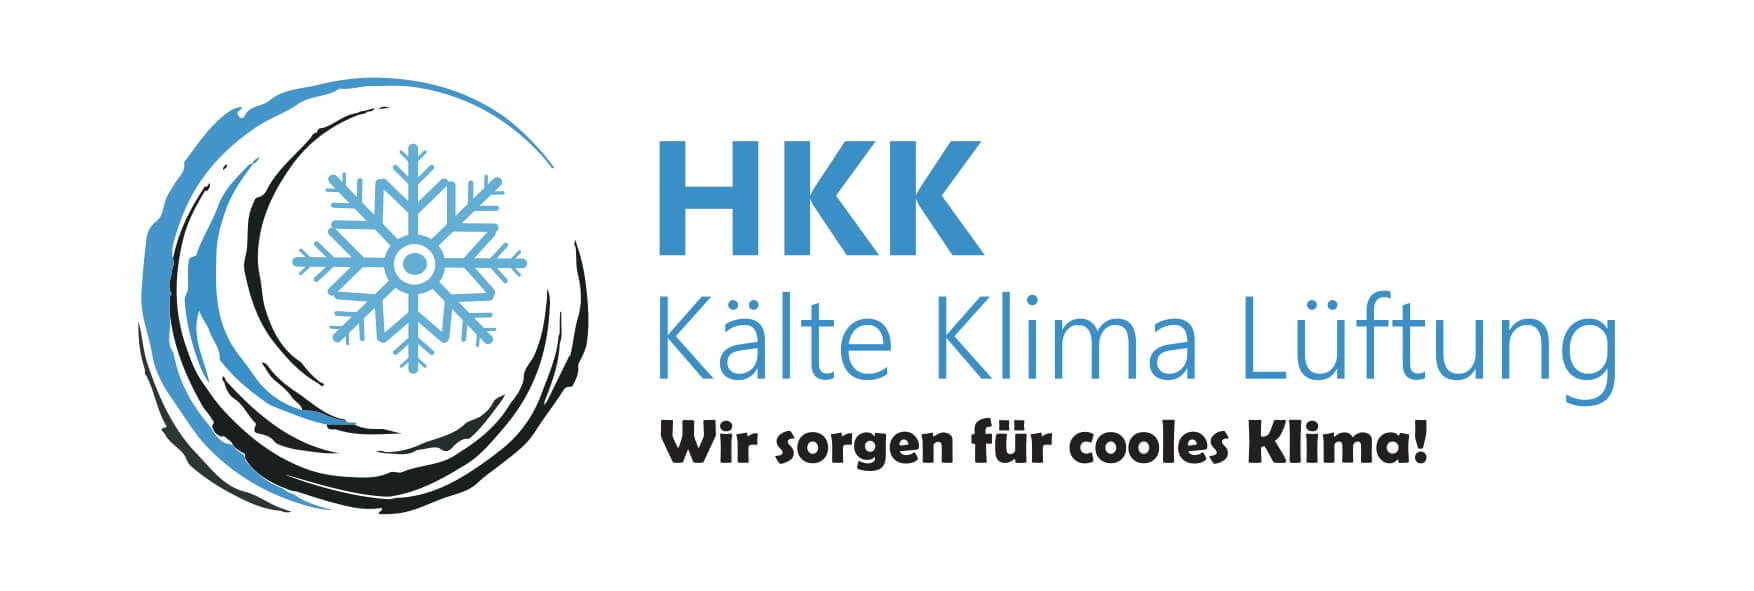 HKK-Logo Vektorgrafik[6597]_page-0001